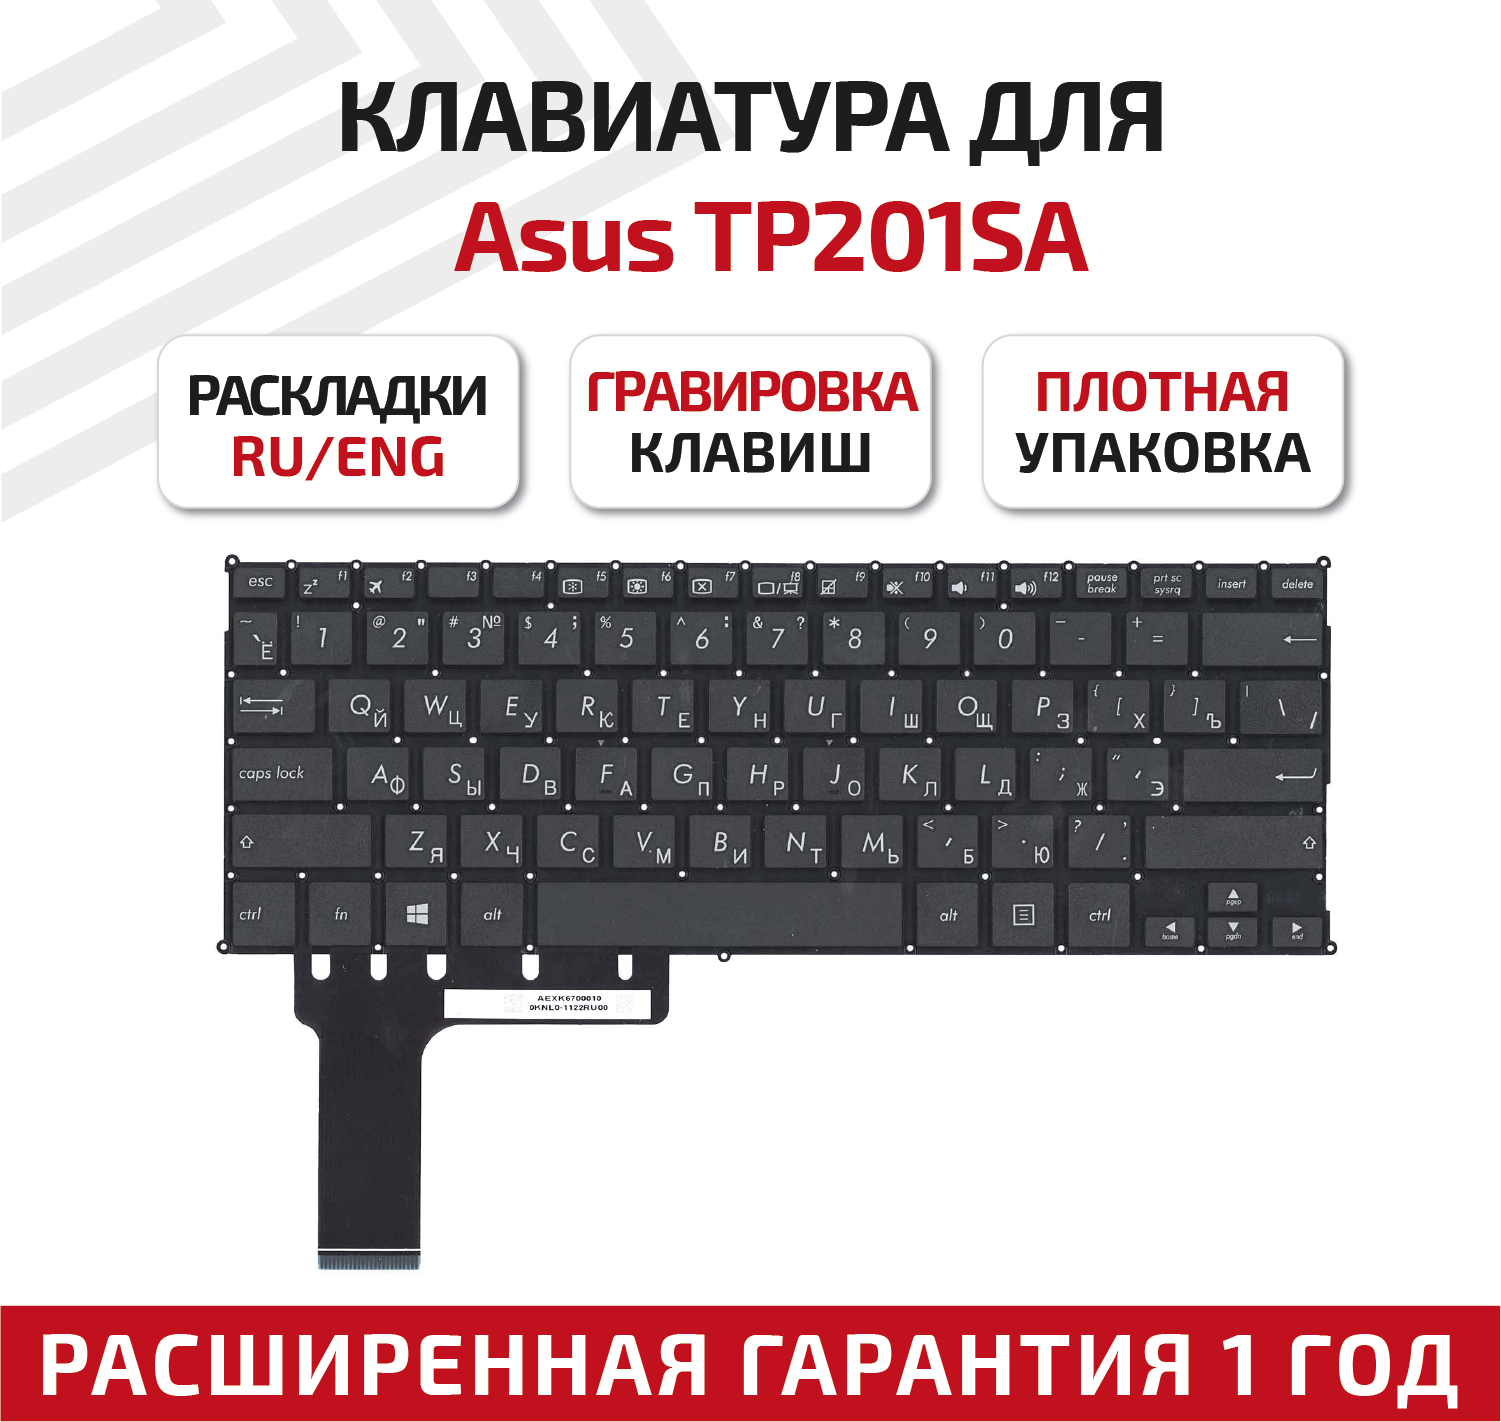 Клавиатура (keyboard) AEXK6700010 для ноутбука Asus E202, E202M, E202MA, E202S, E202SA, TP201SA, E205, E202SA, E202M, черная